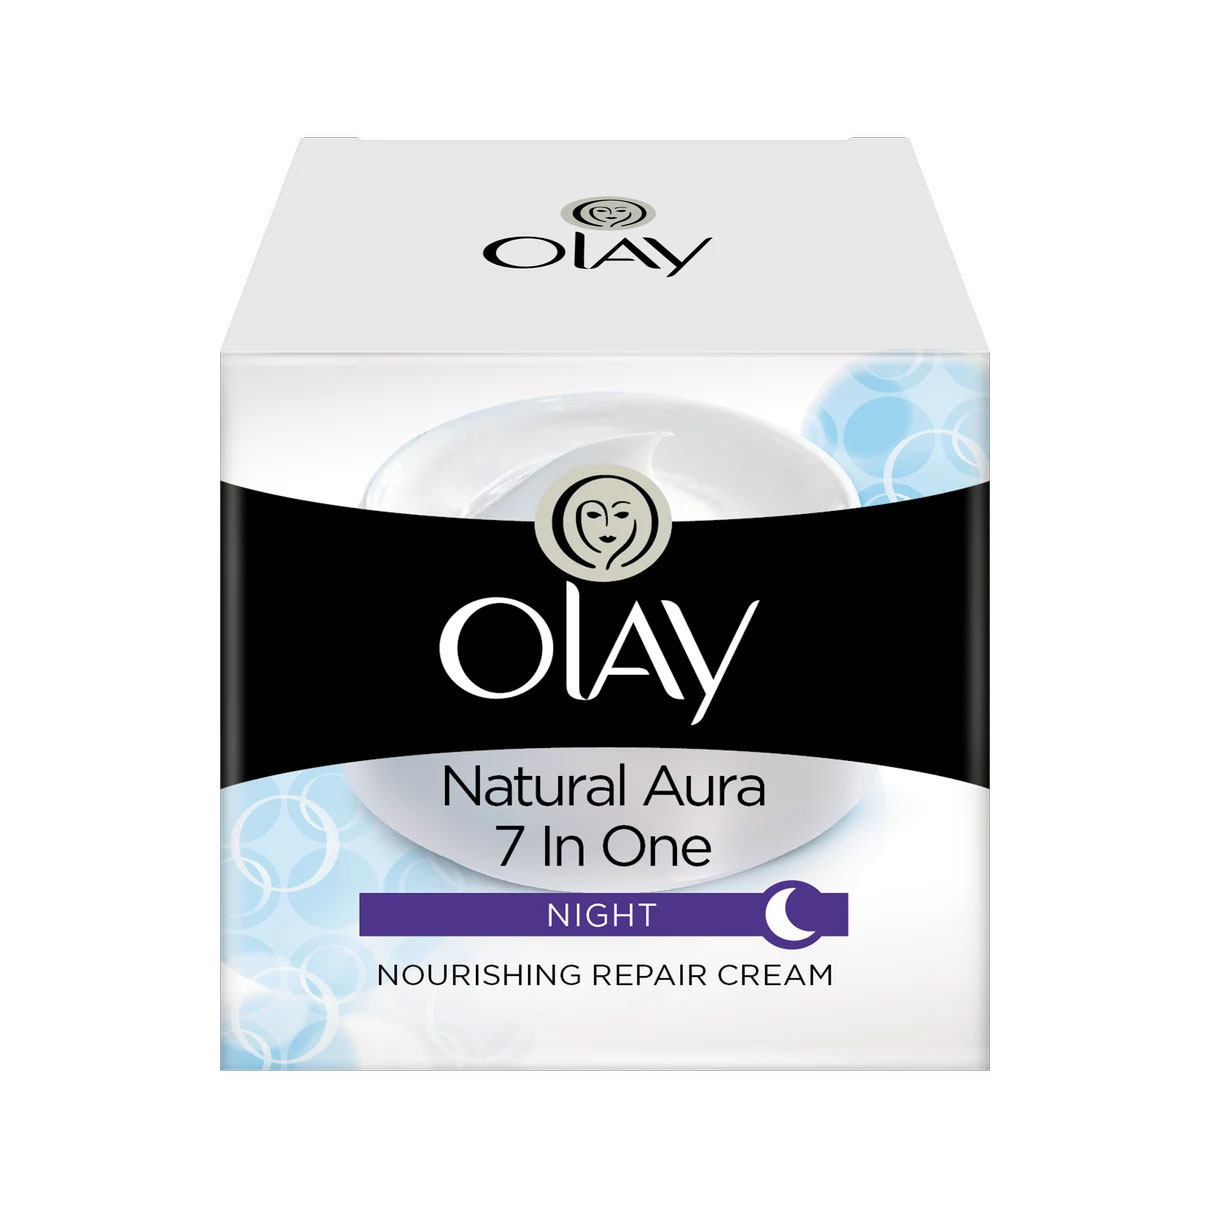 PDP IN - Olay Natural Aura 7 IN ONE Night Nourishing Repair Cream SI1